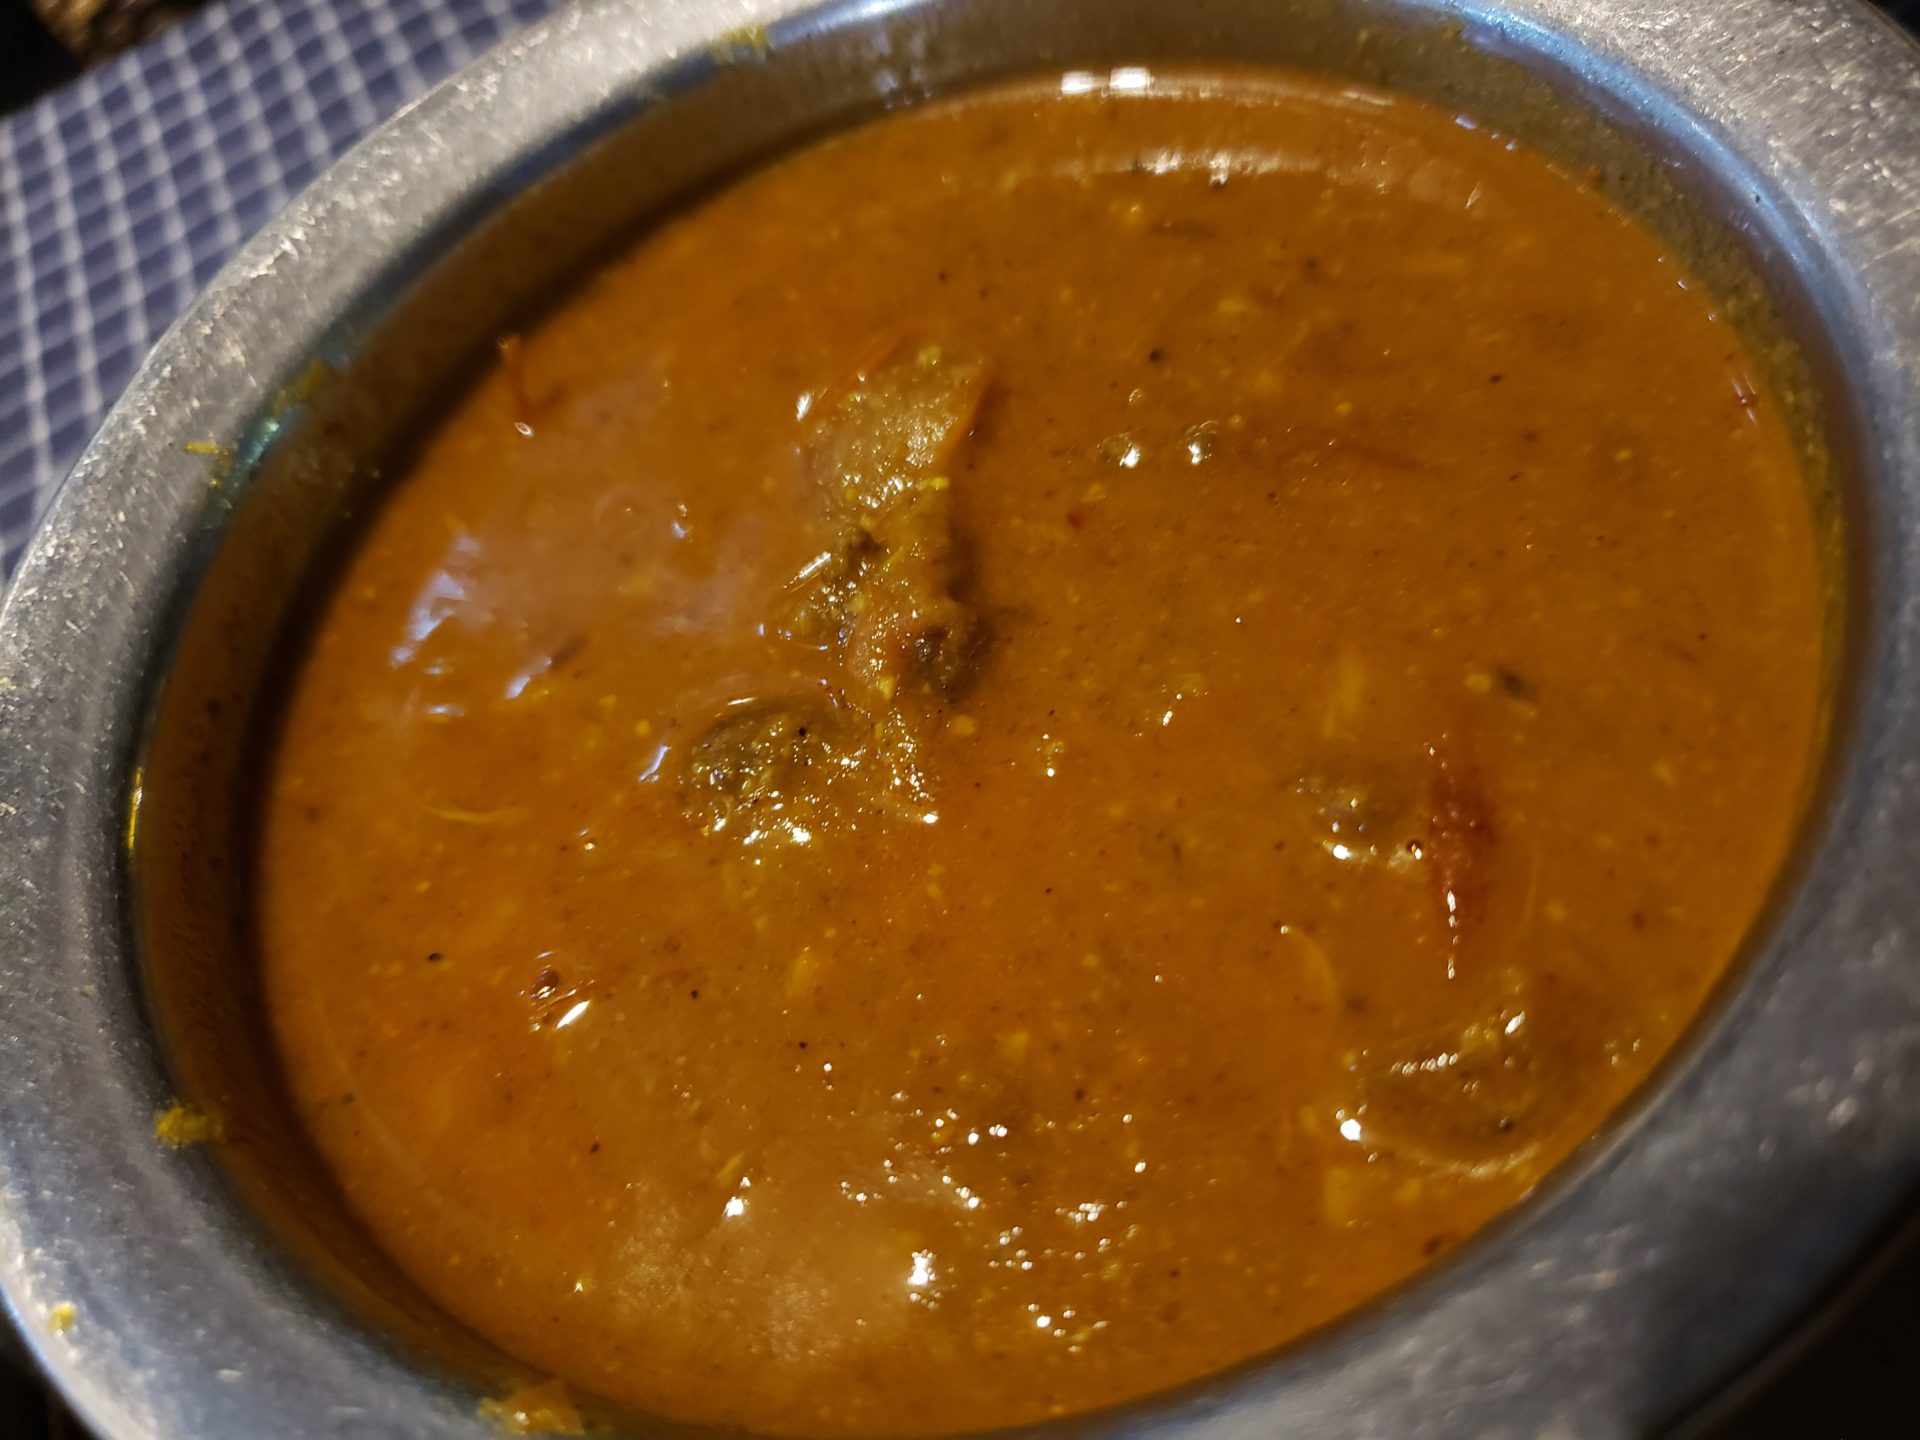 a bowl of brown soup